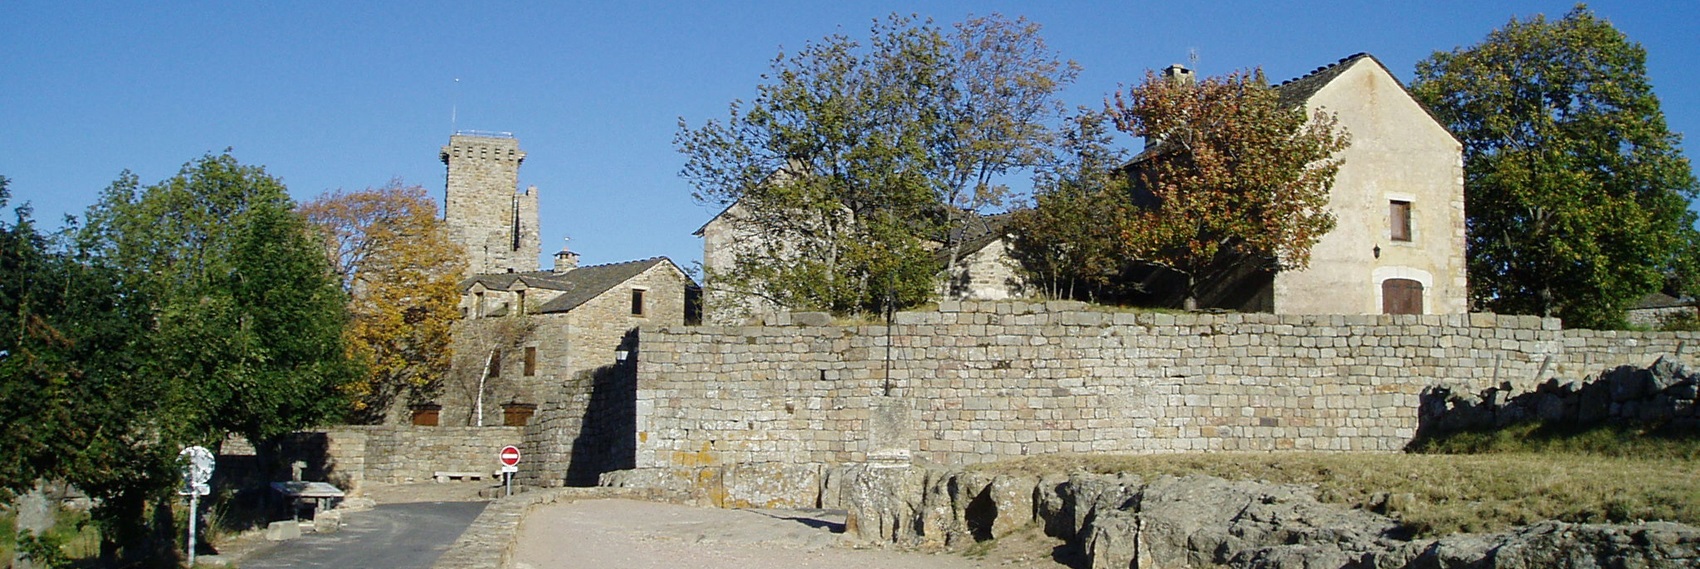 La restauration du village médiéval de La Garde-Guérin en Lozère